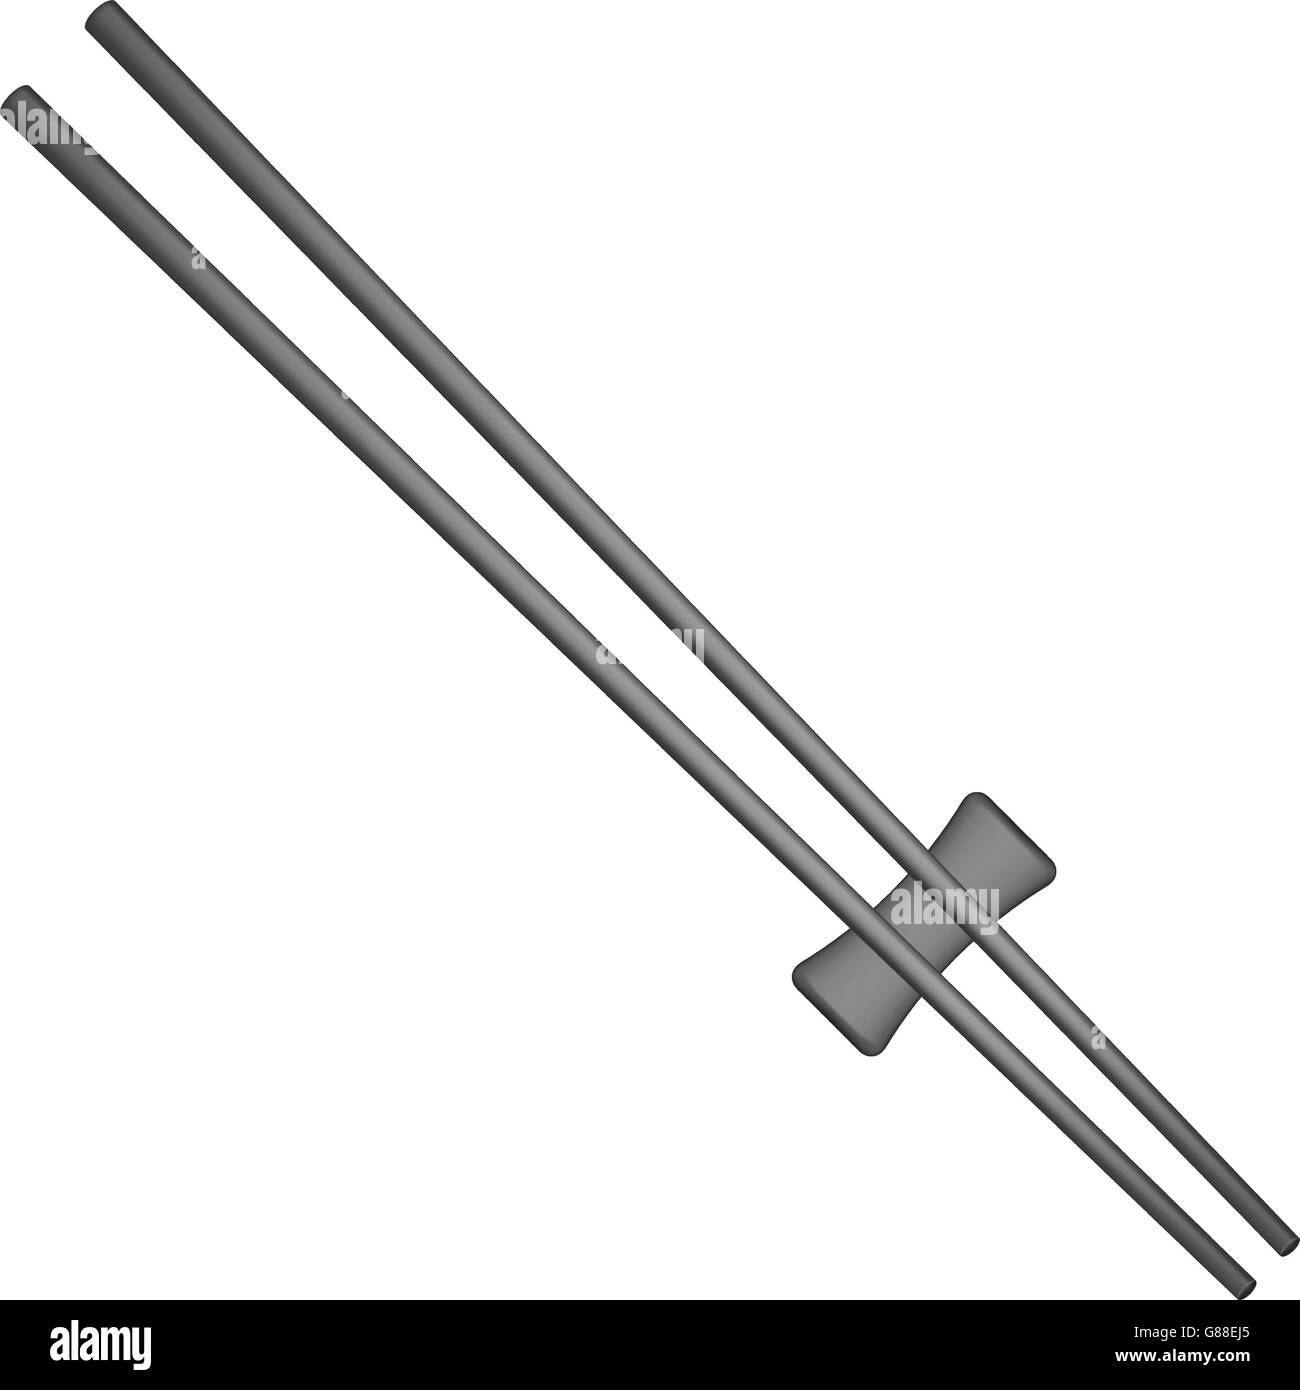 Wooden chopsticks in black design Stock Vector